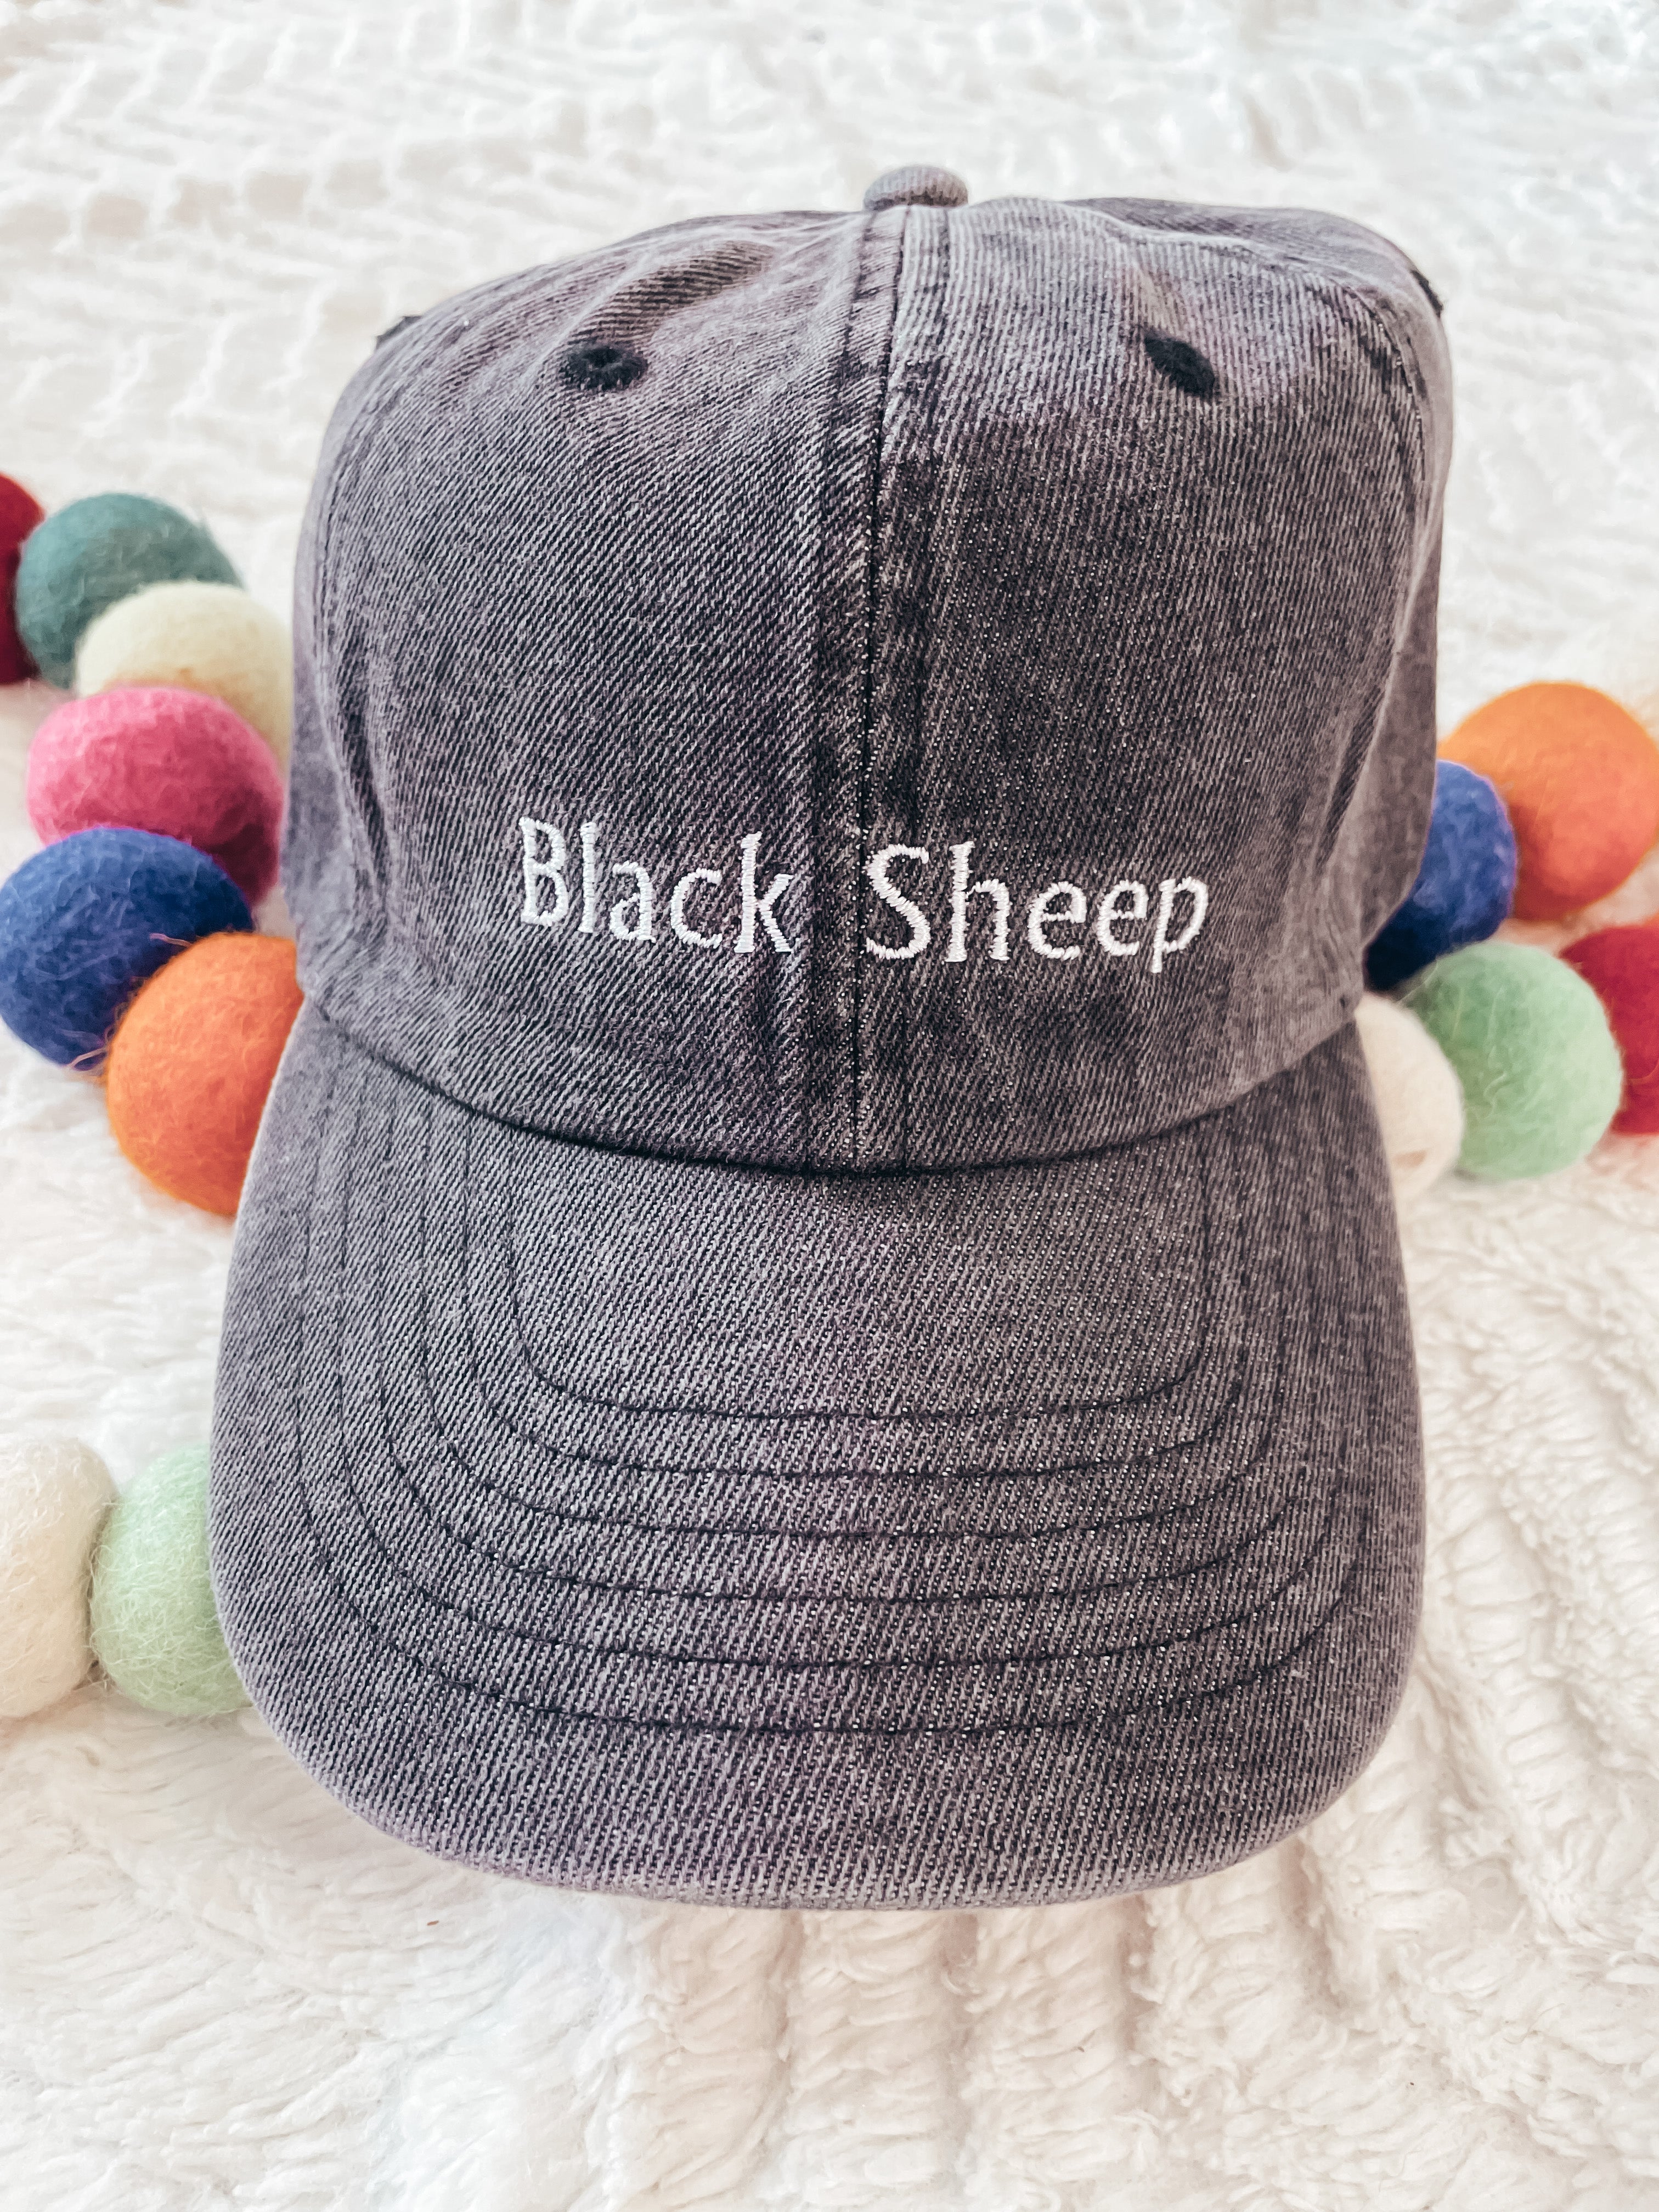 Black Sheep Baseball Hat - Vintage Wash Black